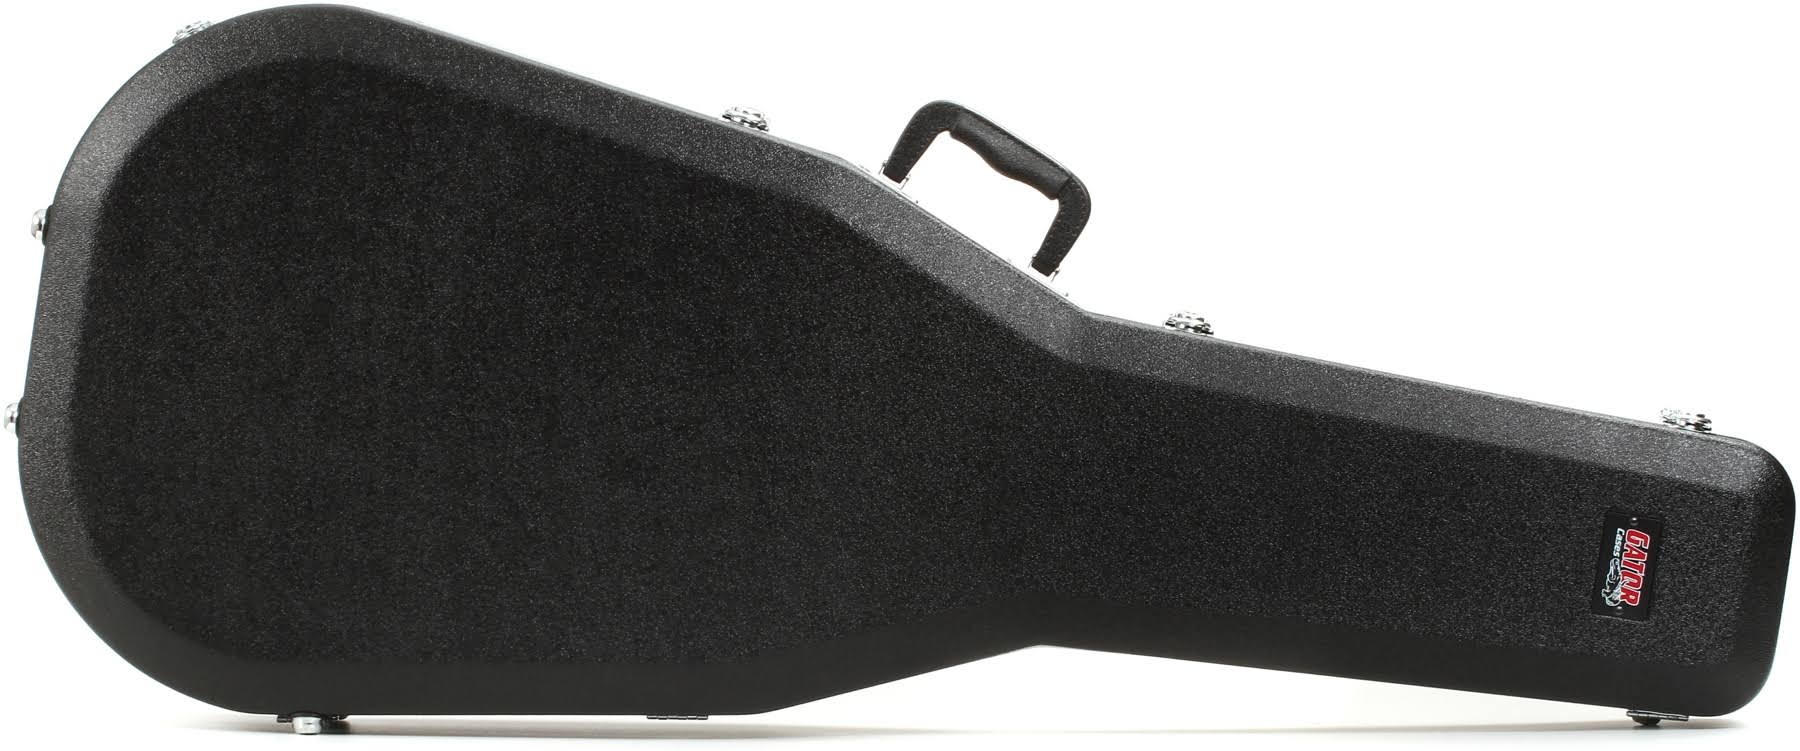 Gator 12 String Dreadnought Guitar Hard Case - Black